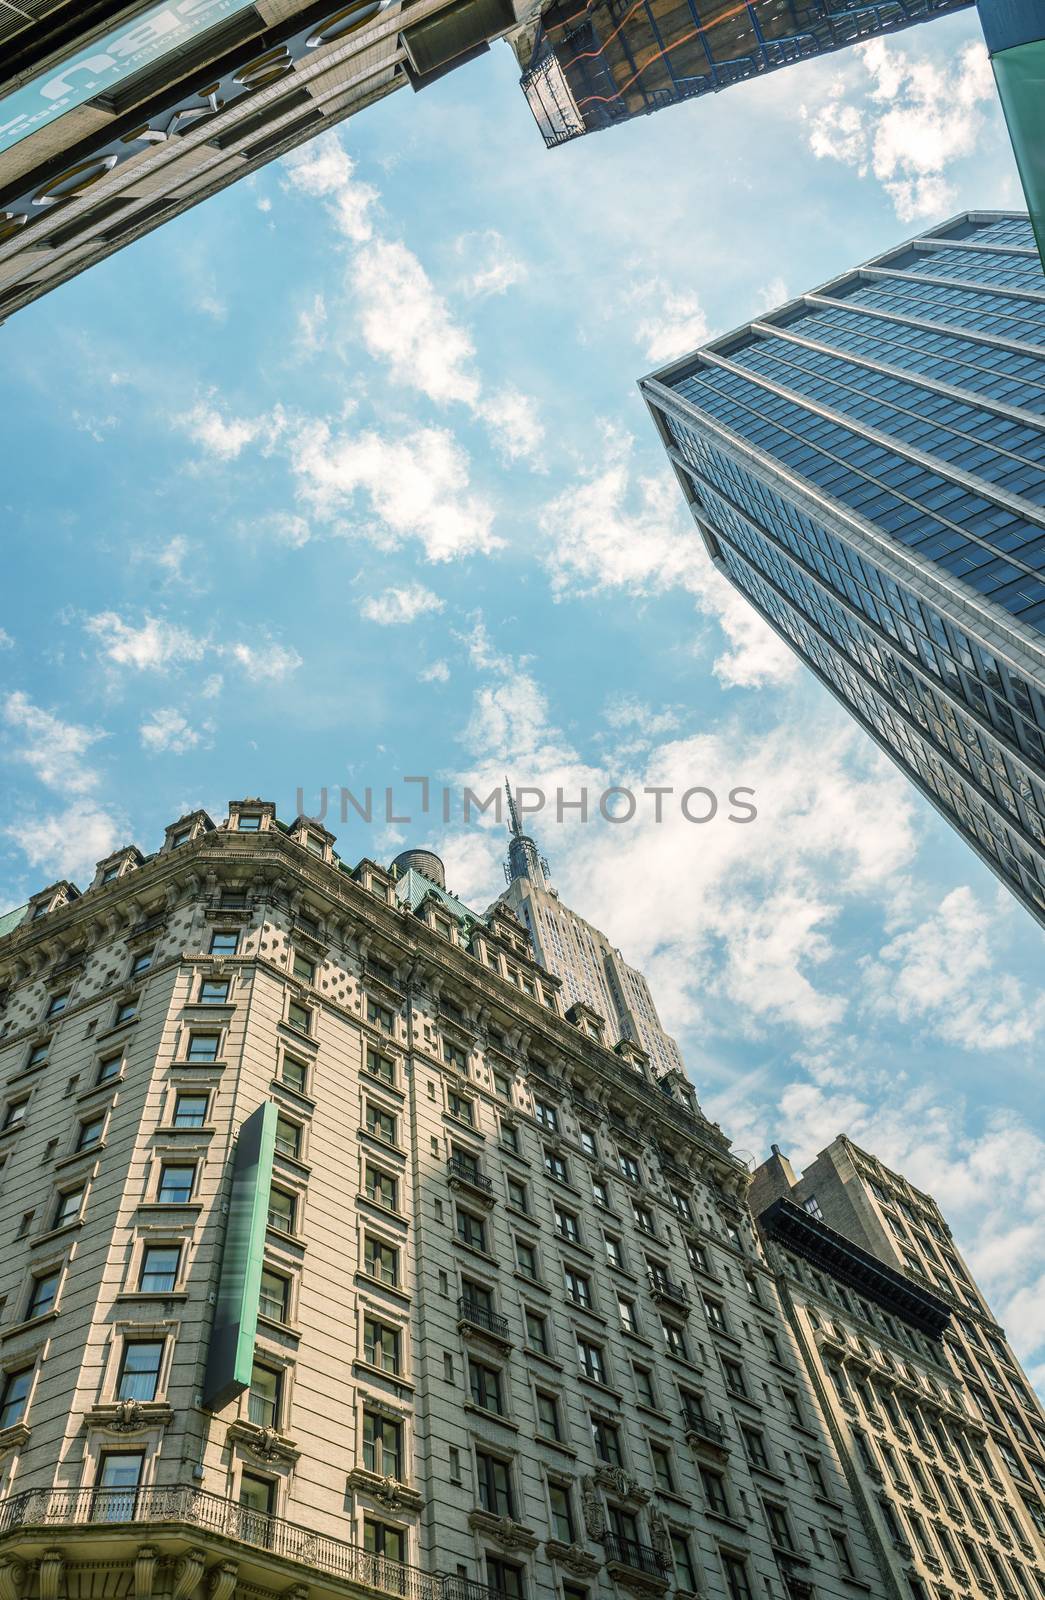 Stunning skyscrapers of Manhattan. New York from street level.